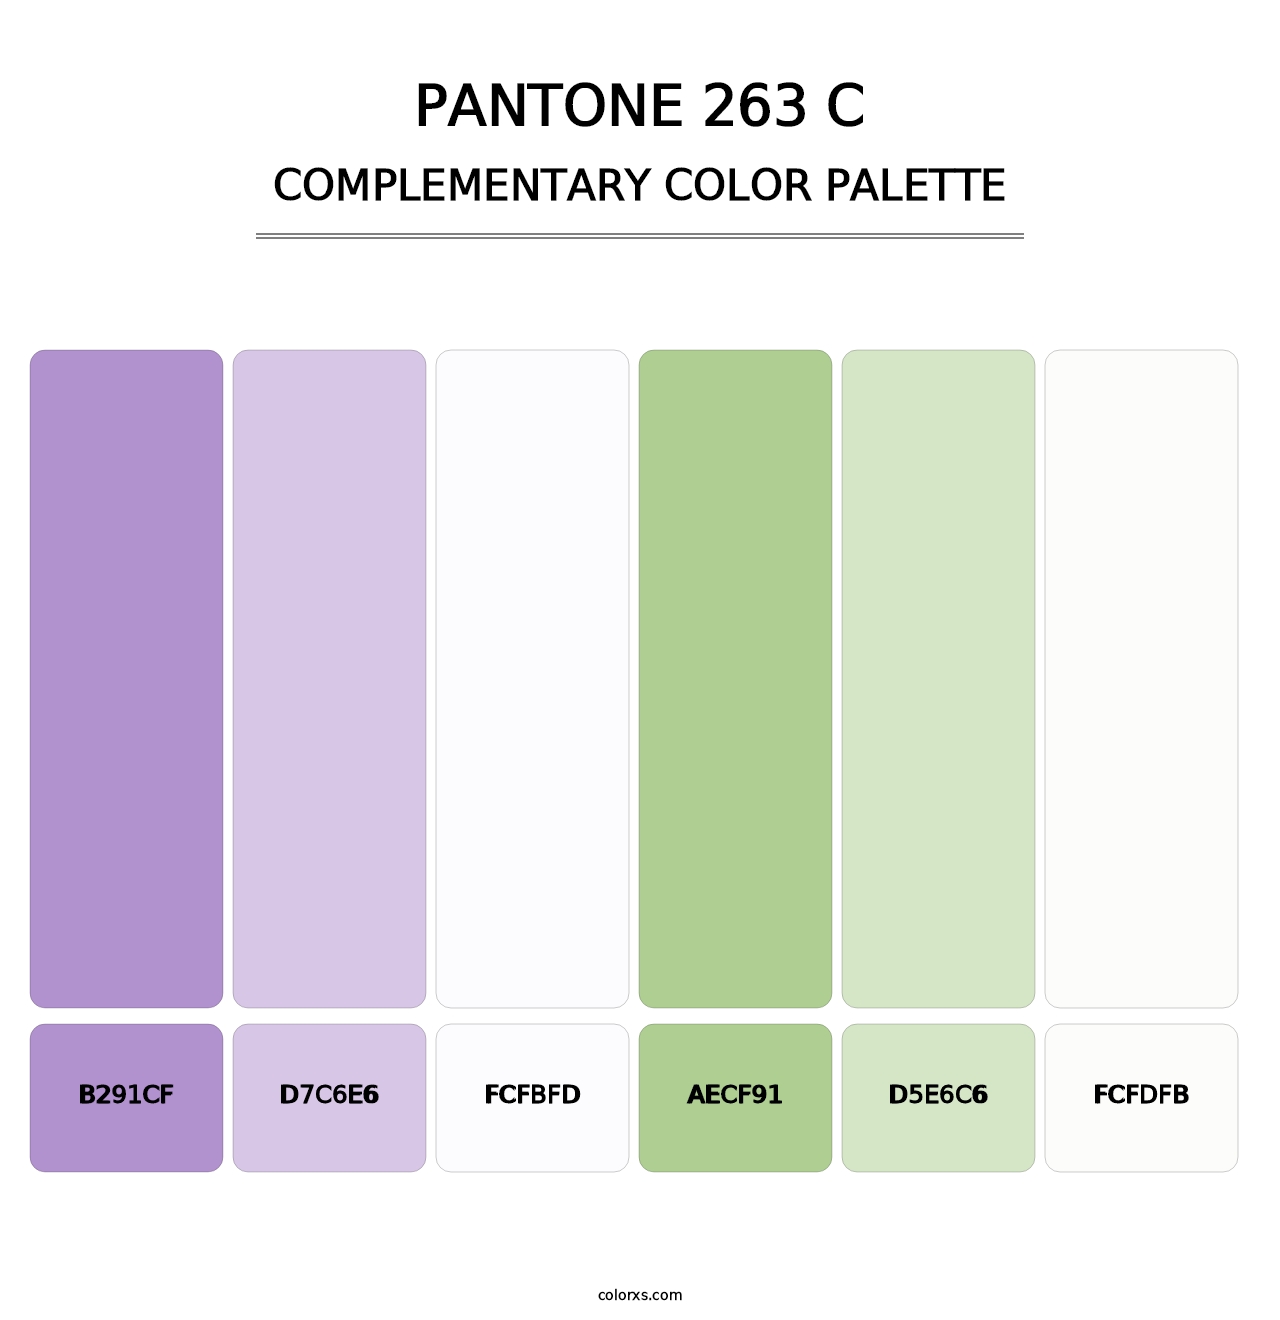 PANTONE 263 C - Complementary Color Palette